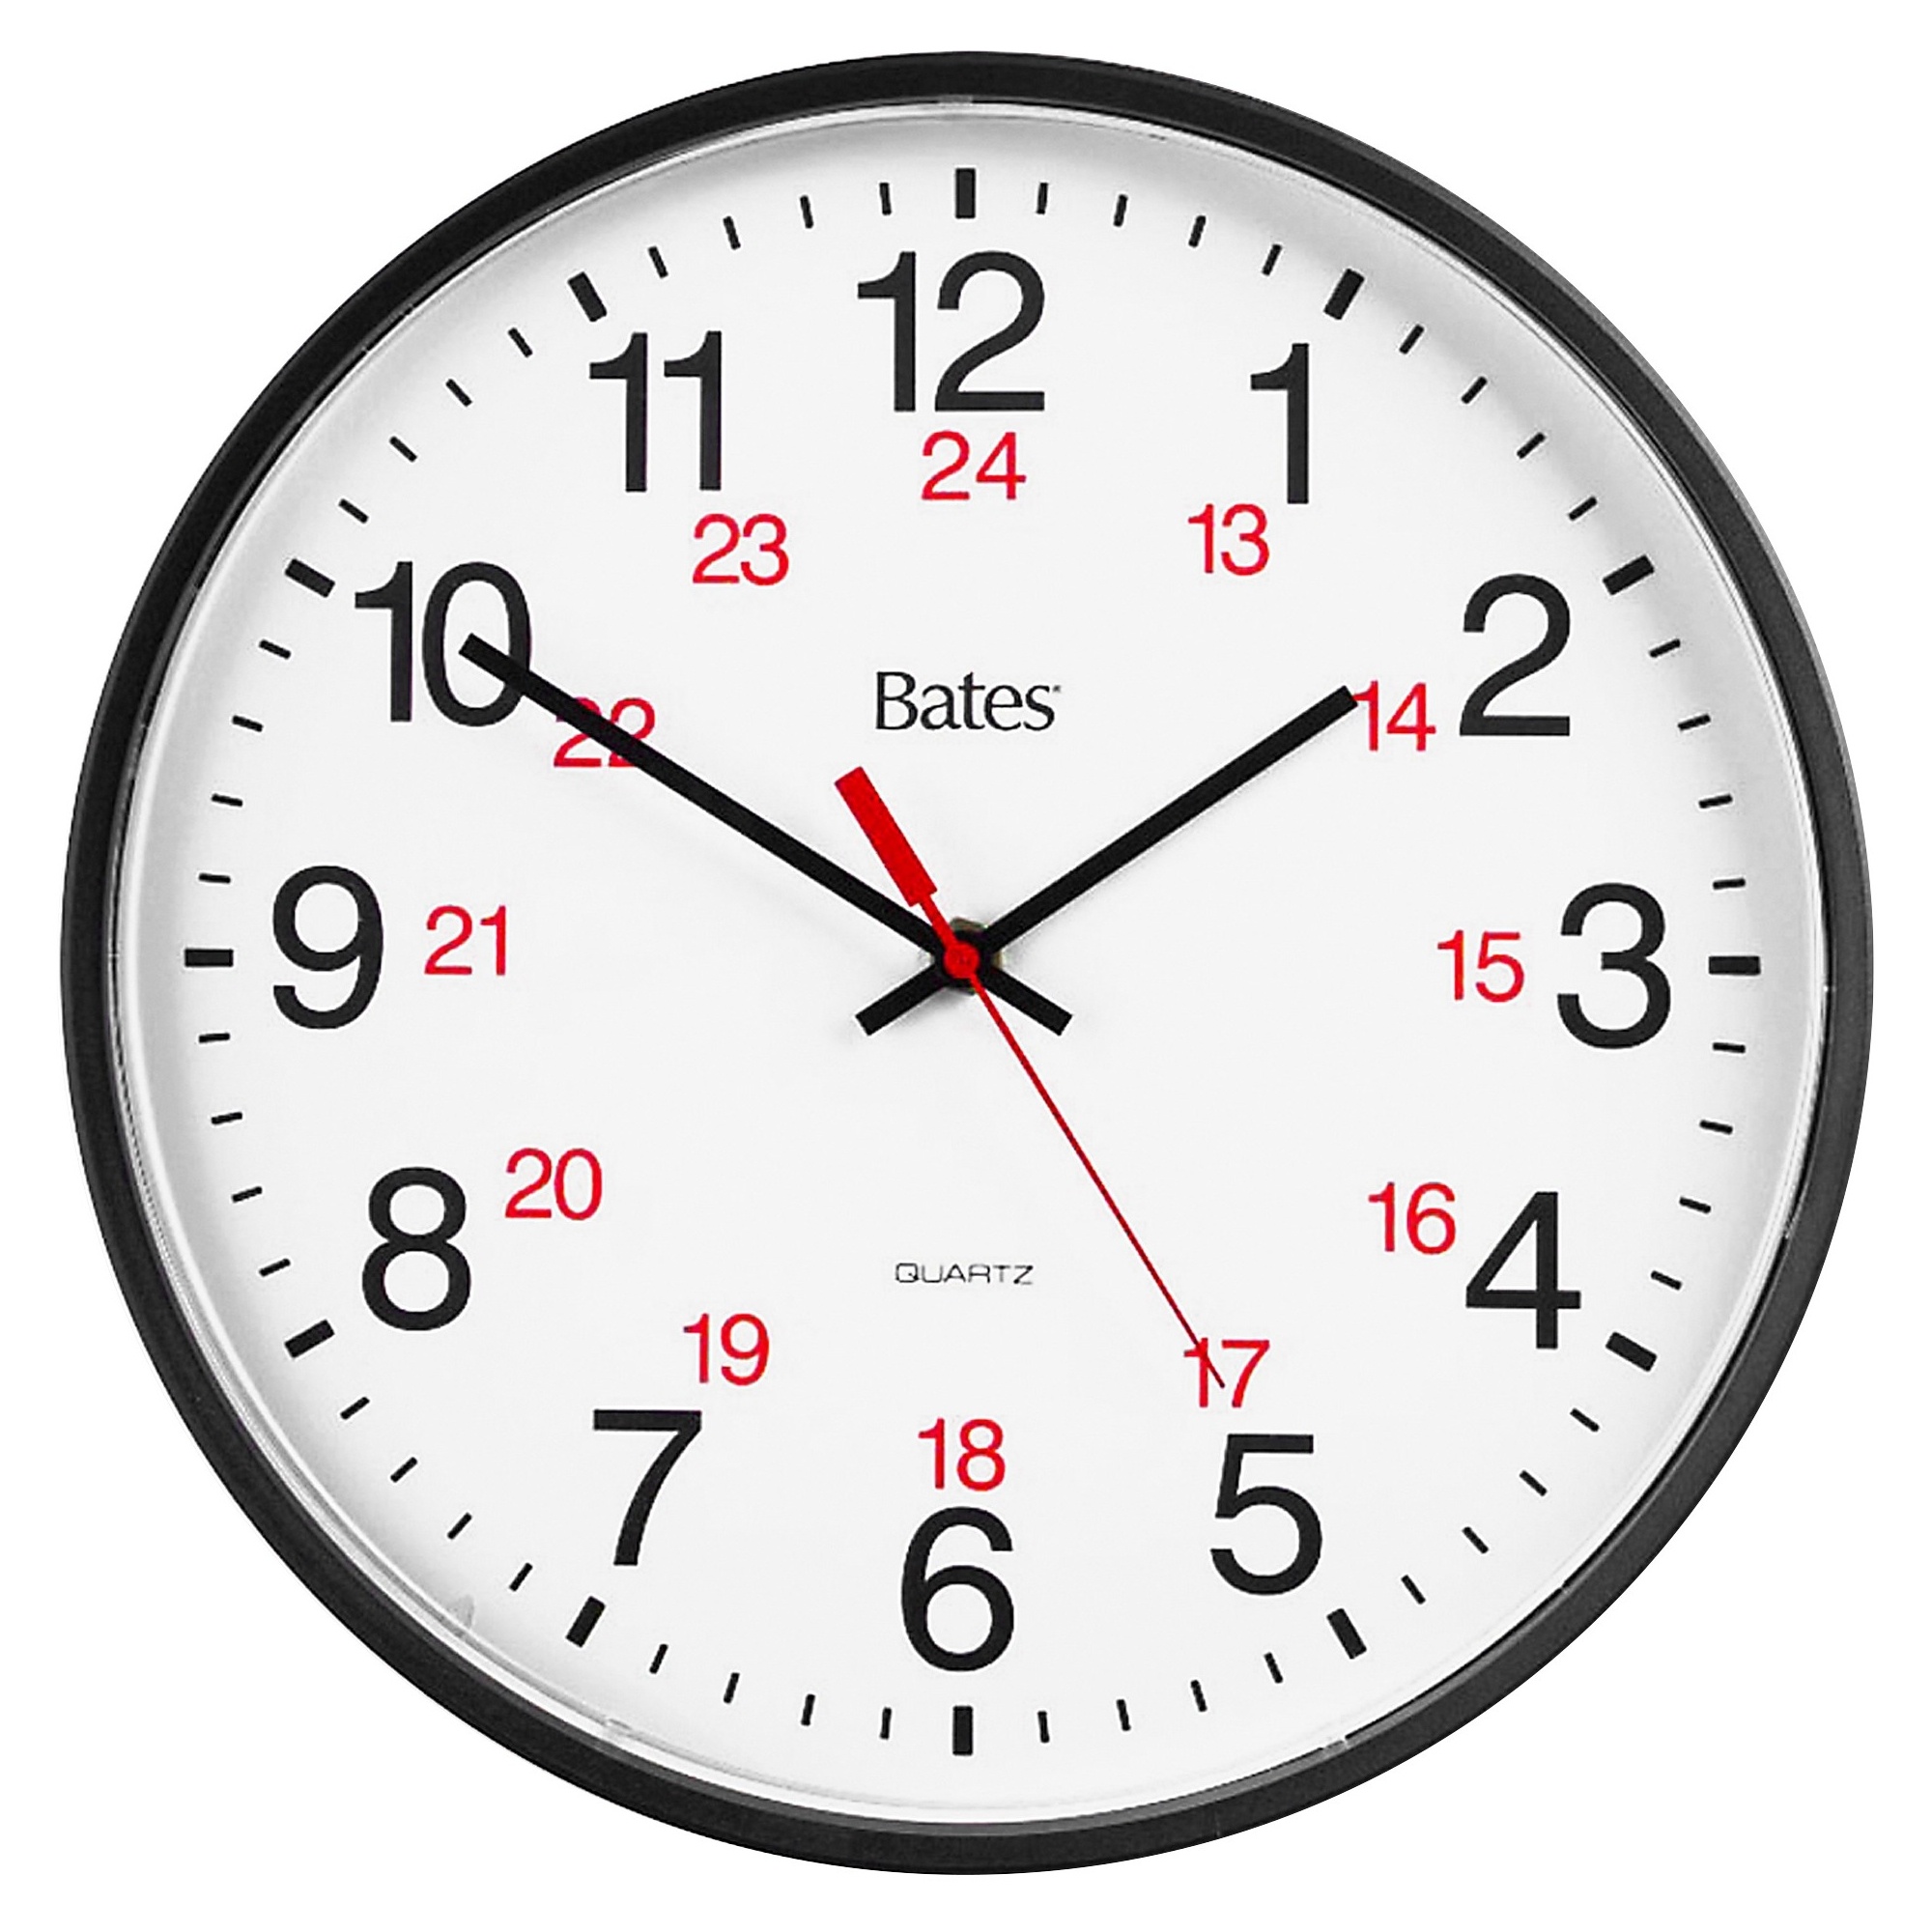 24-hour-analog-clock-mechanism-24-hour-analog-clock-24-hour-analog-clock-online.jpg